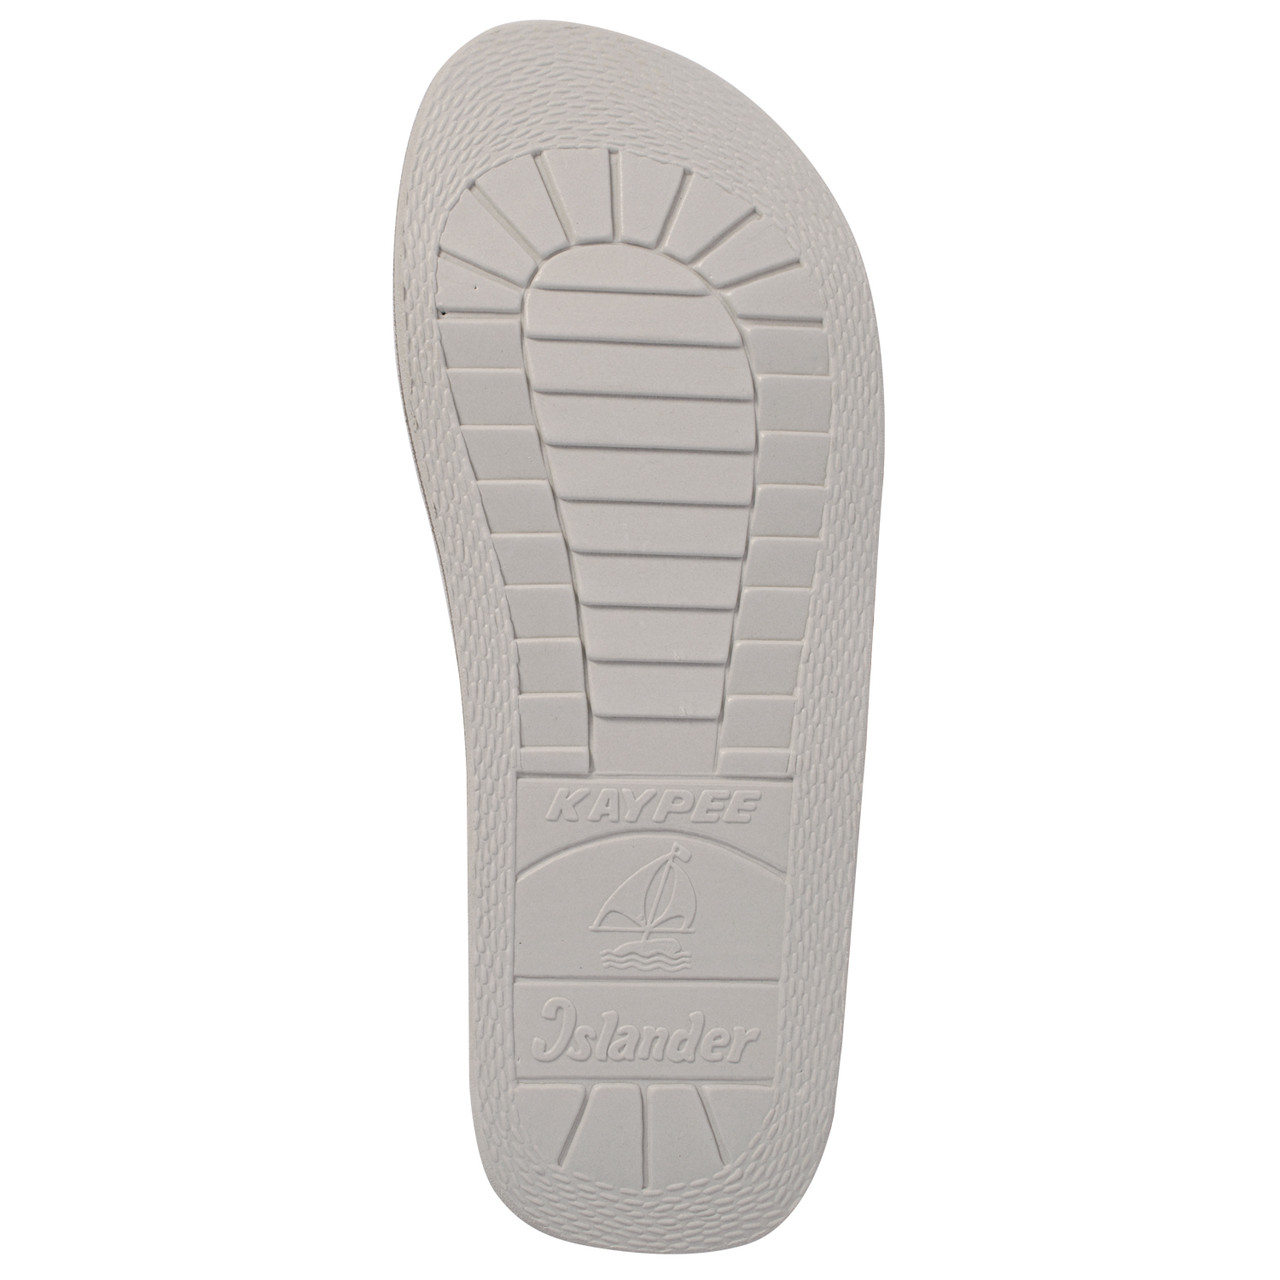 Islander All-Weather Flip-Flop Sandals product image